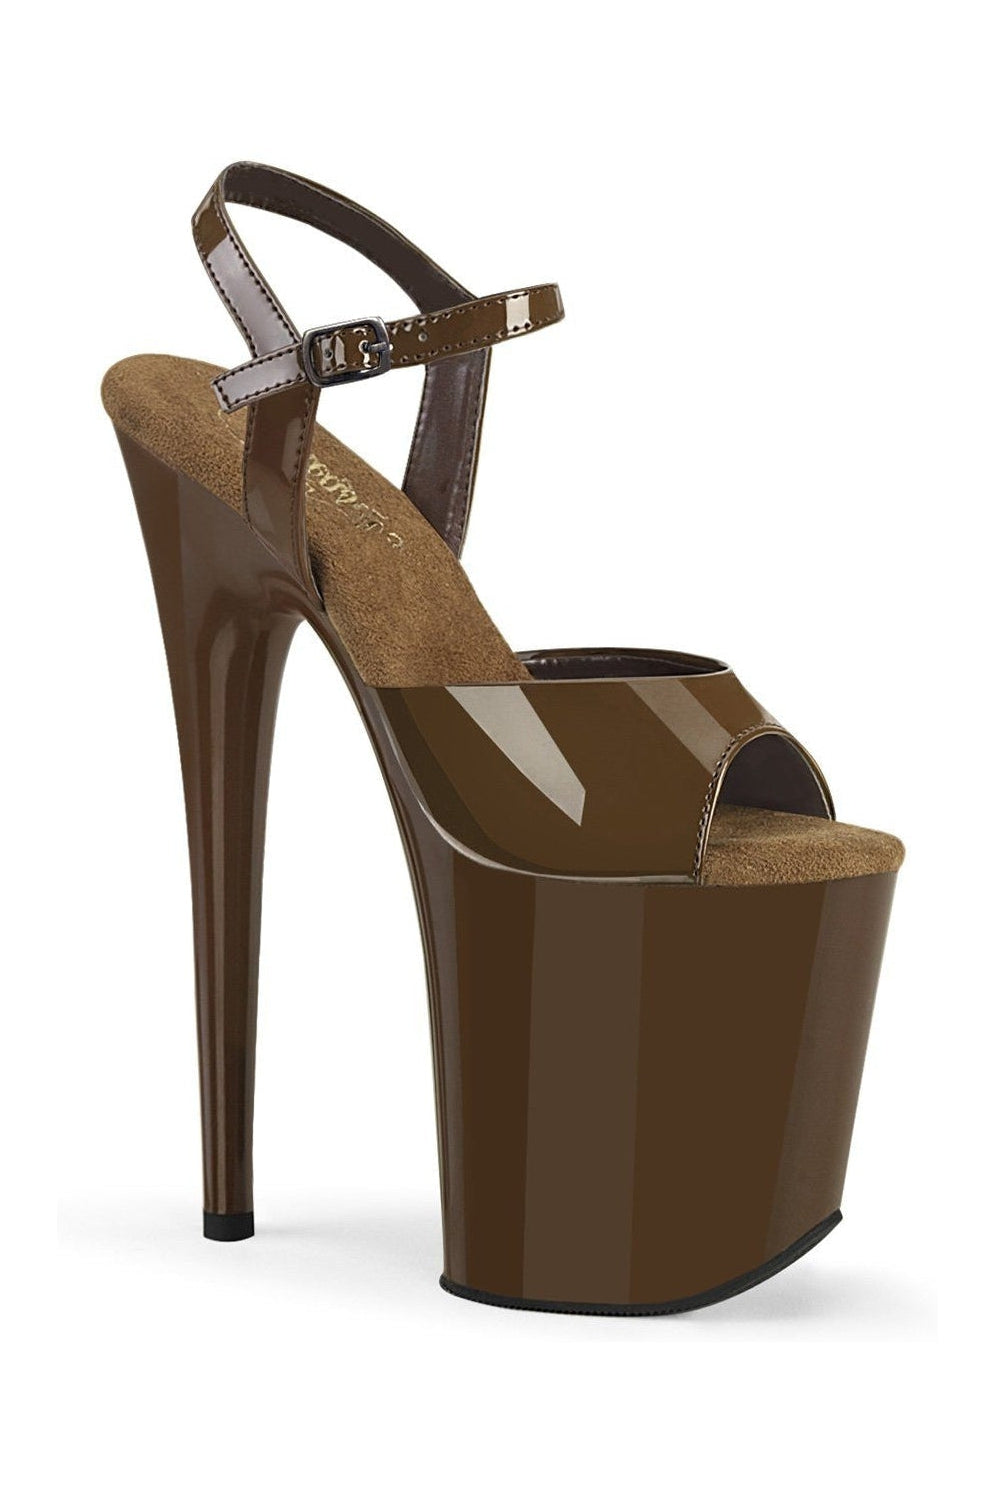 FLAMINGO-809 Sandal | Brown Patent-Sandals-Pleaser-Brown-7-Patent-SEXYSHOES.COM